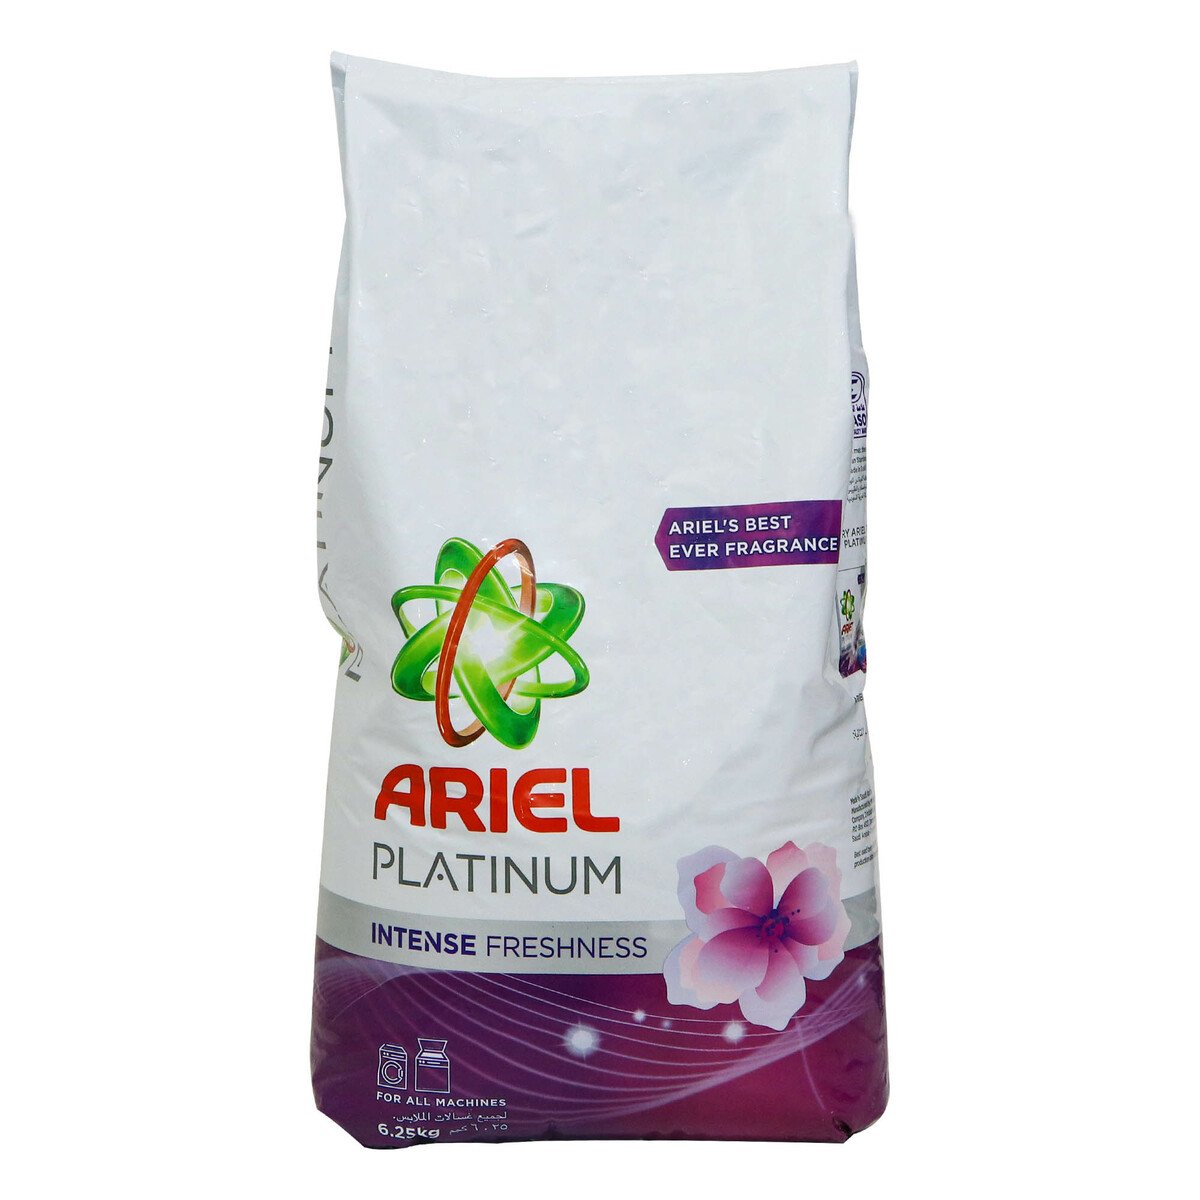 Ariel Platinum Washing Powder Intense Freshness 6.25kg